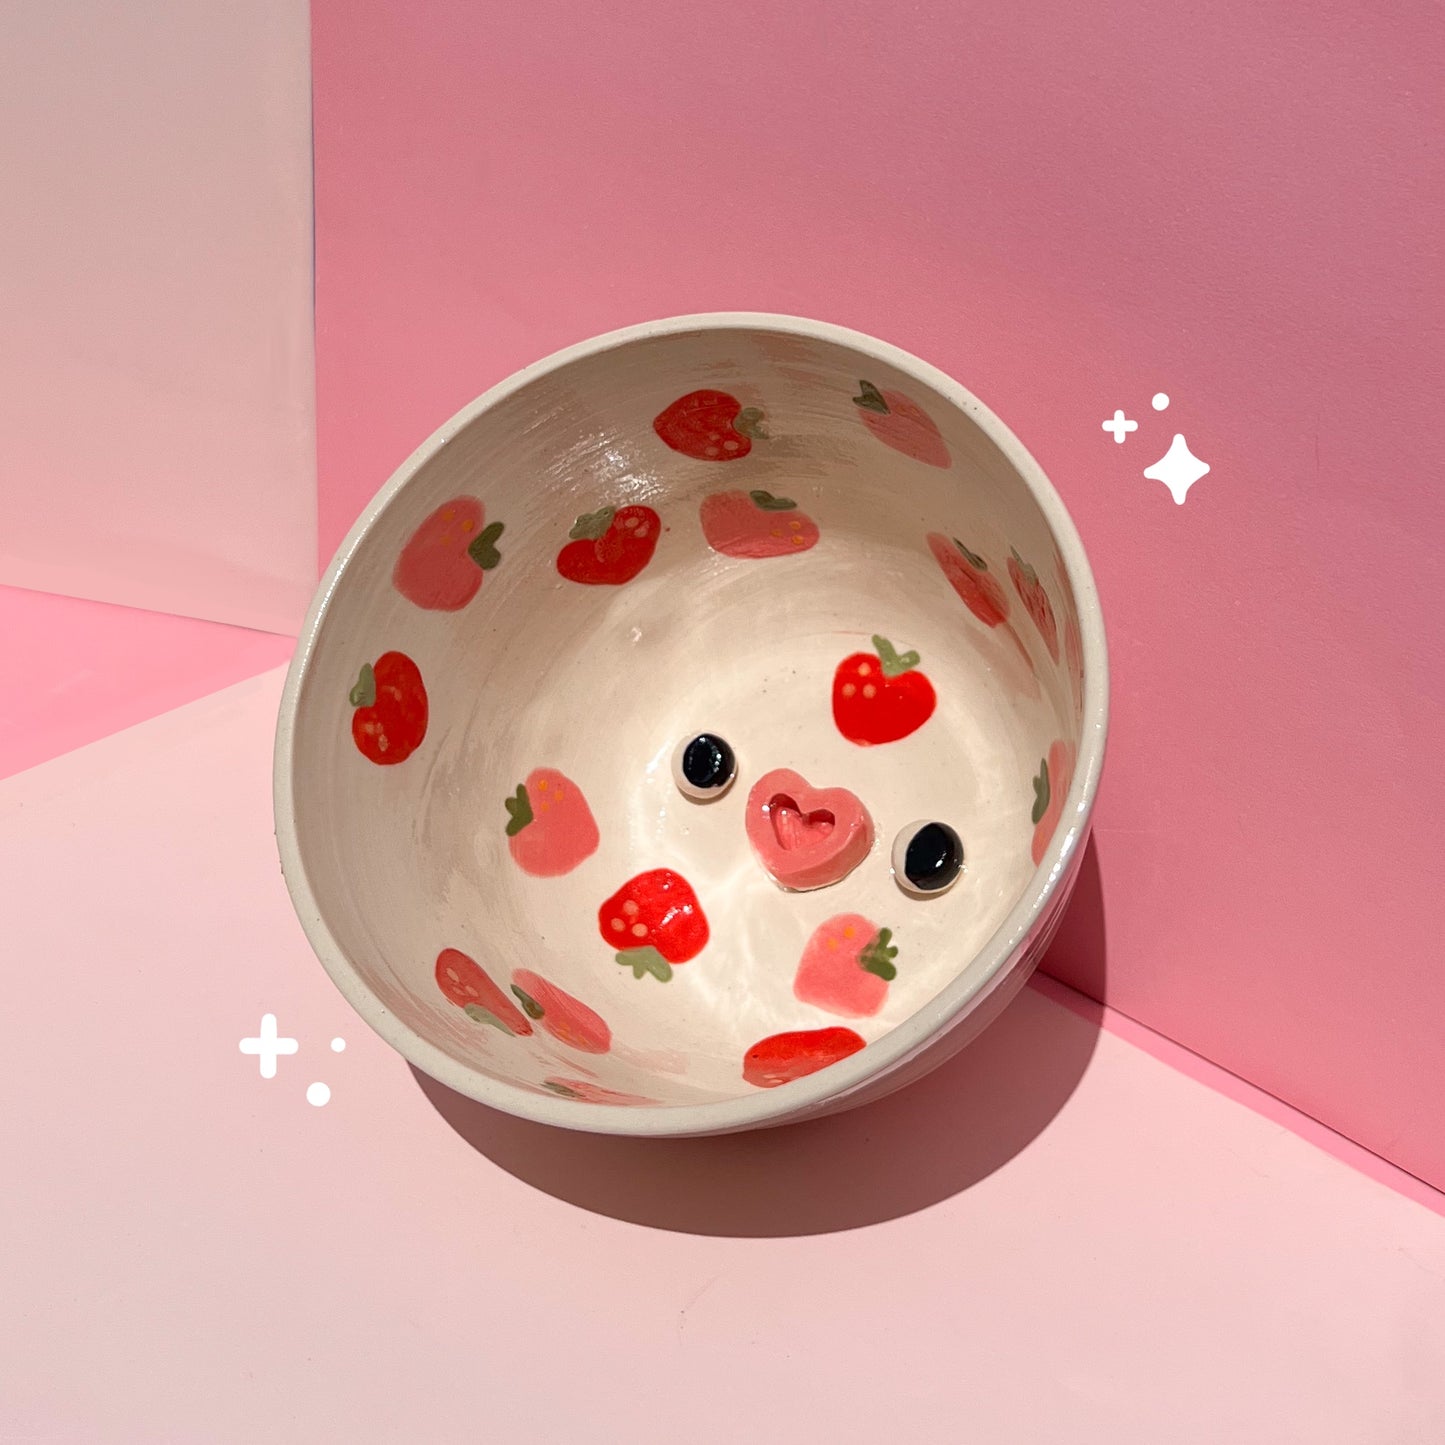 Strawberry bowl